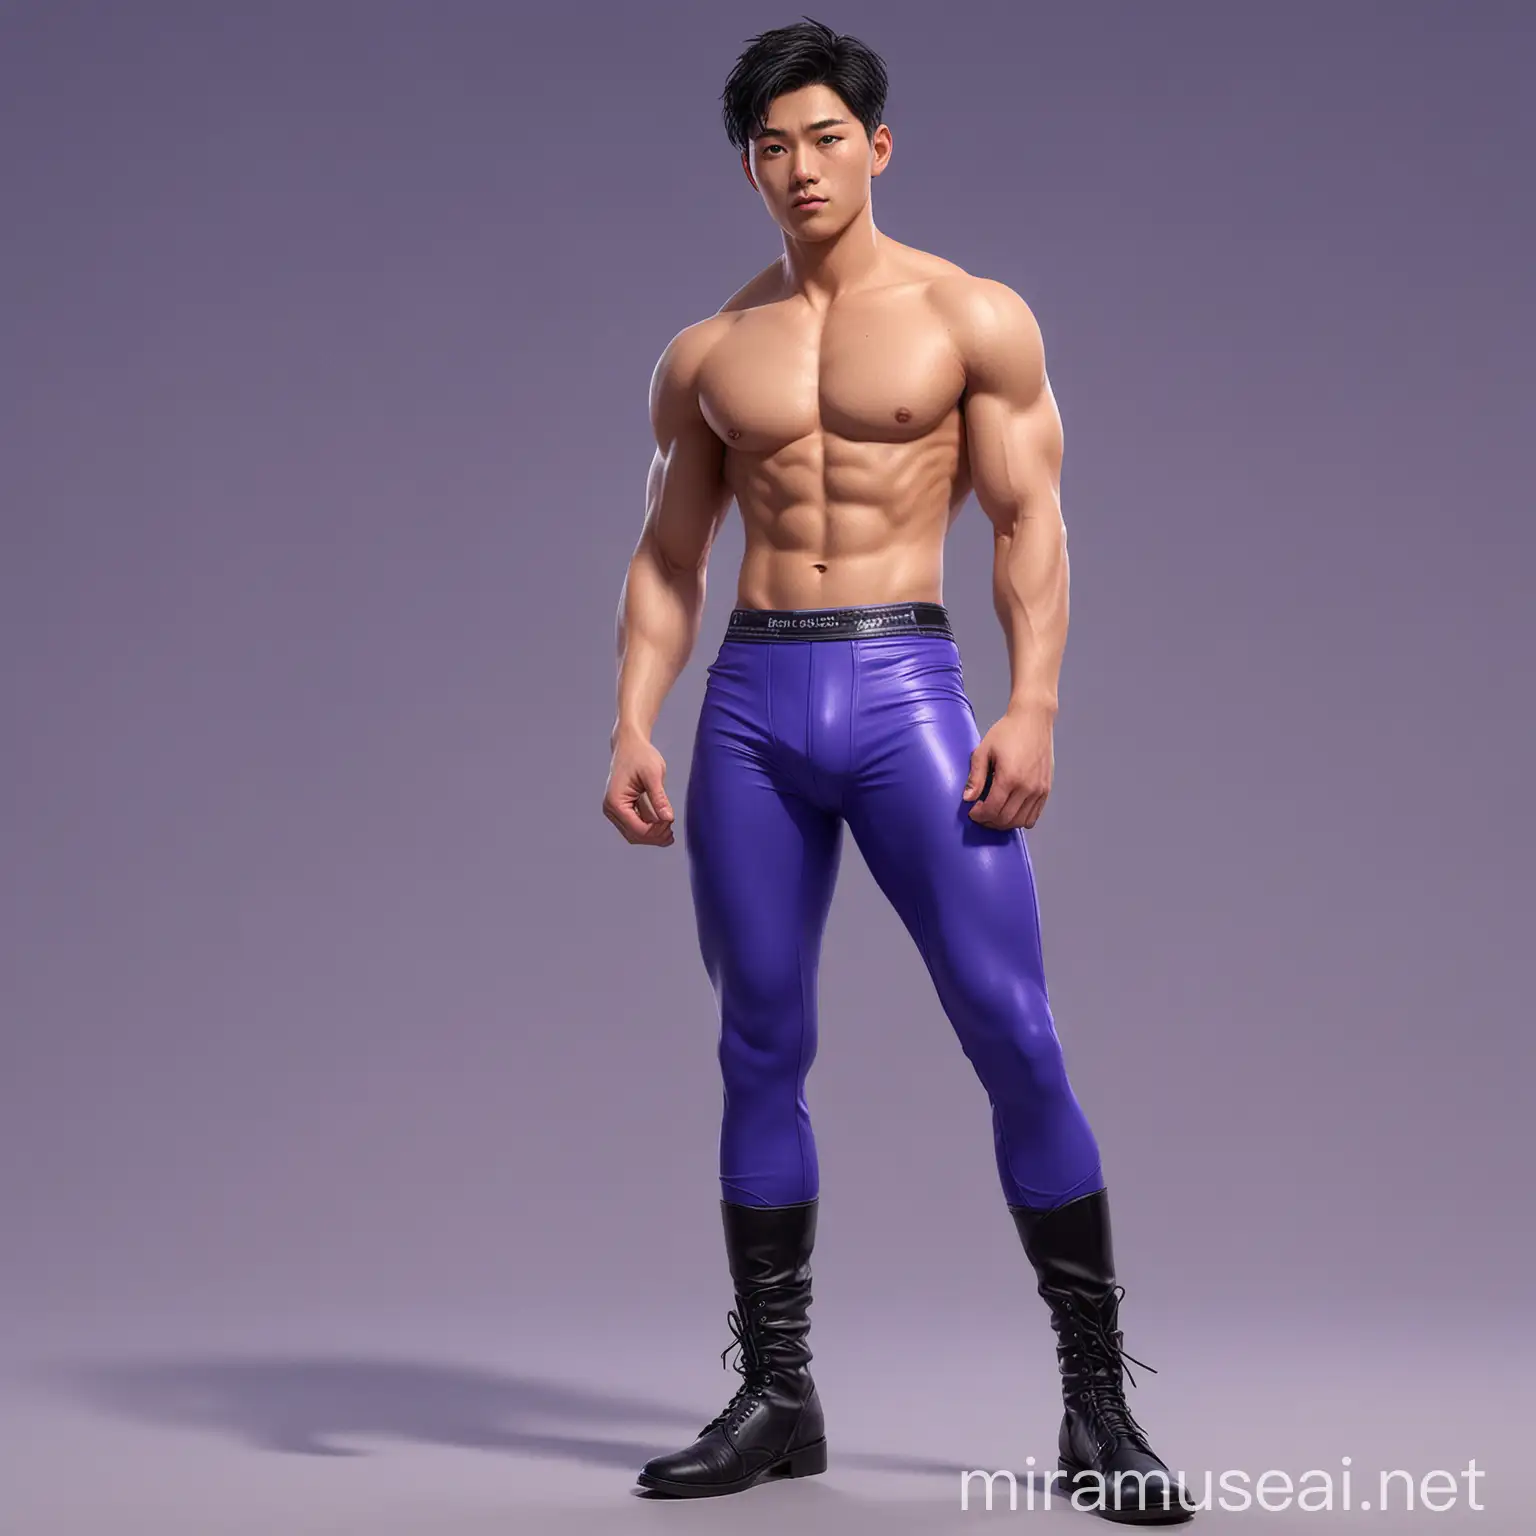 Muscular South Korean Fighter in Cobalt Blue Spandex Leggings